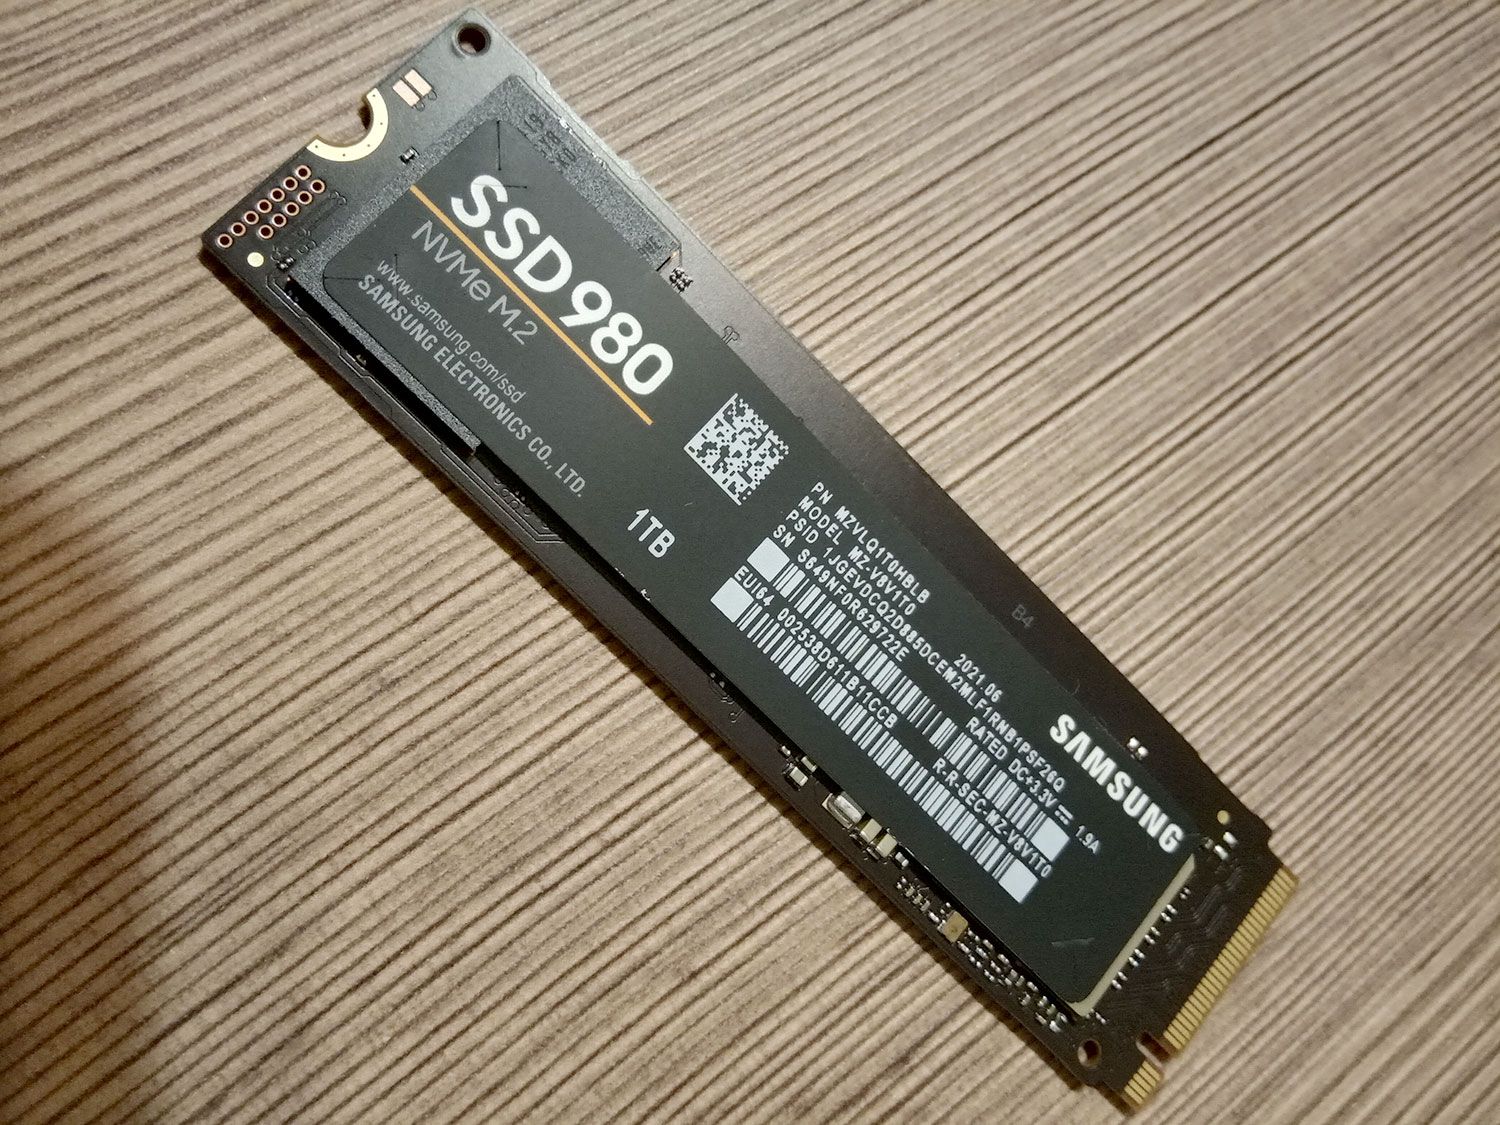 Ssd накопитель samsung 980 m 2 2280. SSD Samsung 980 1tb. SSD Samsung 980 MZ v8v1t0bw. M.2 накопитель Samsung 980. SSD M.2 Samsung 980, 1тб.